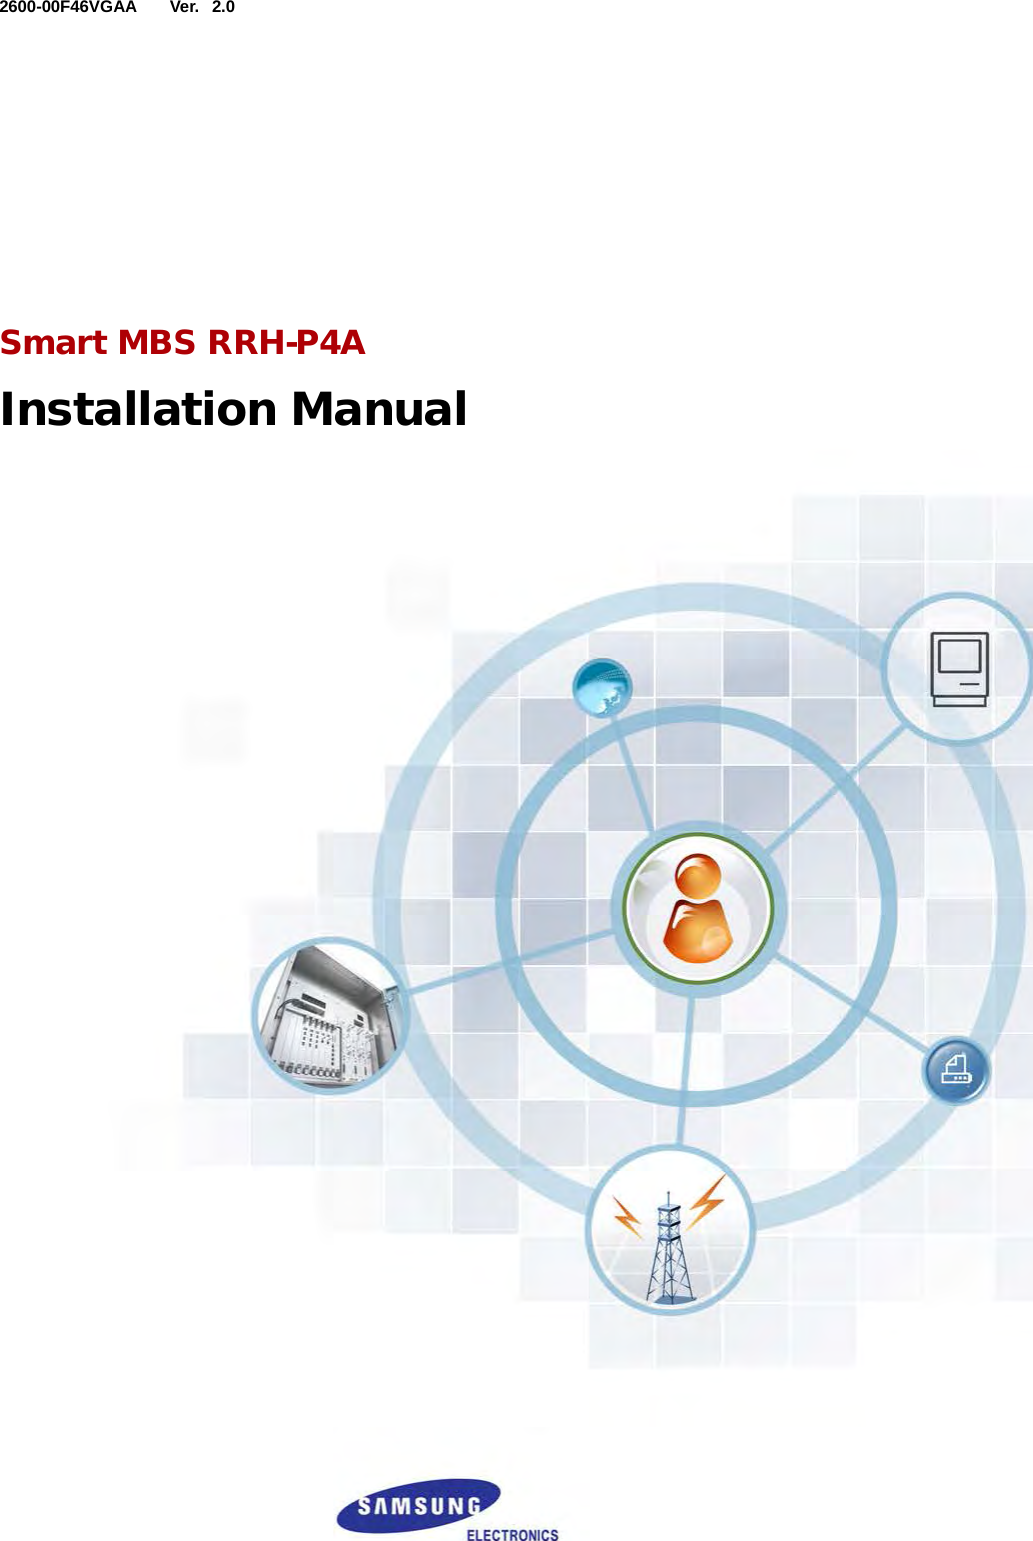  Ver.  2600-00F46VGAA 2.0 Smart MBS RRH-P4A Installation Manual 